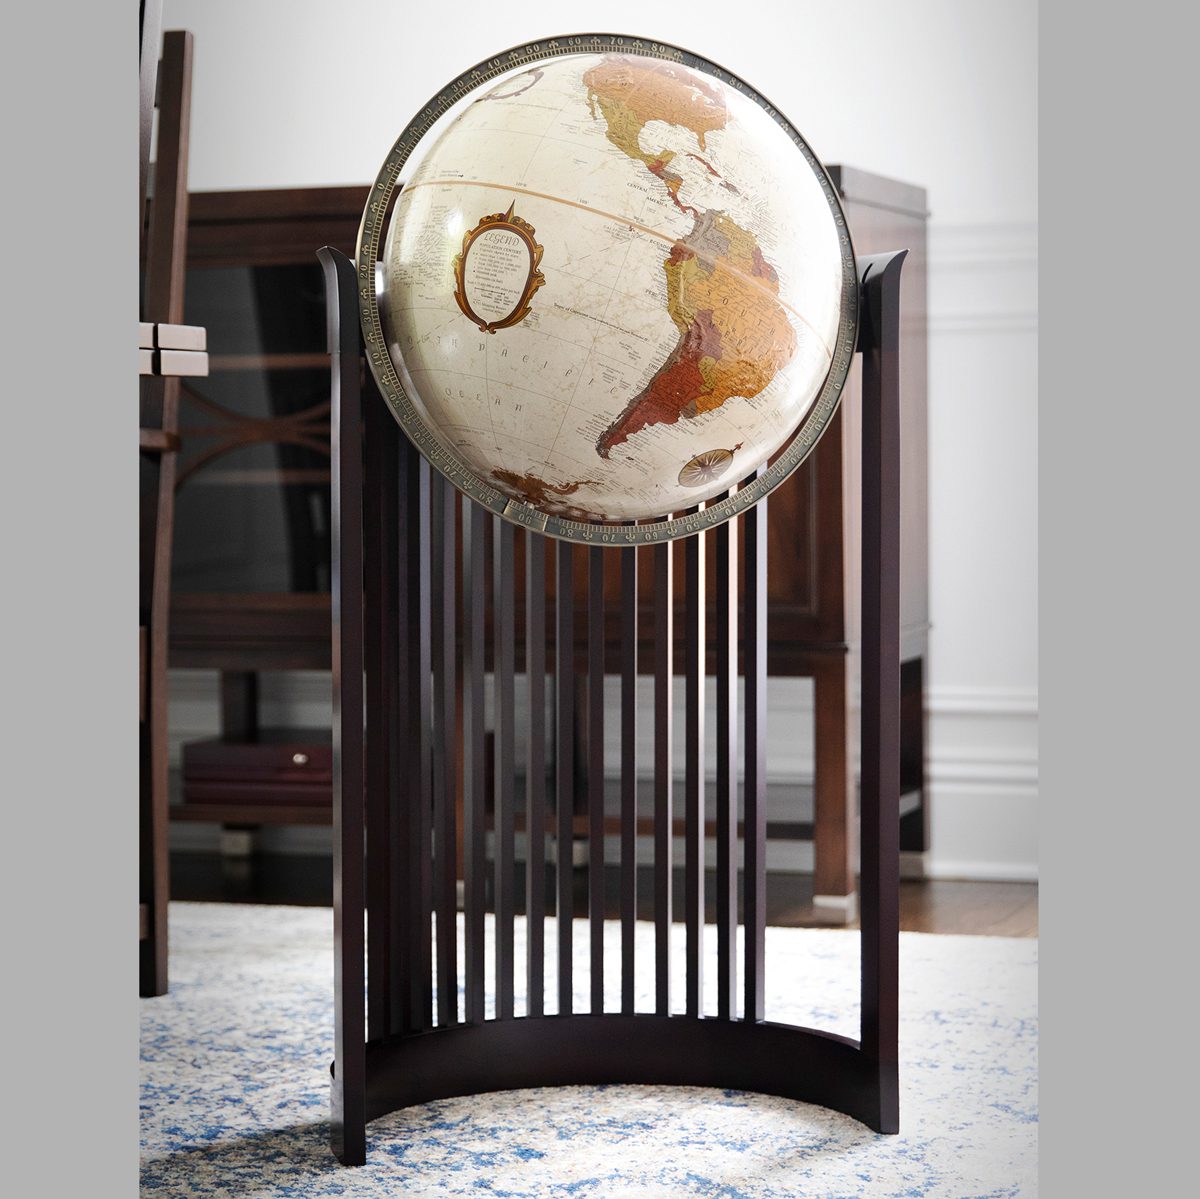 Barrel Globe - RP-27823 - Ultimate Globes